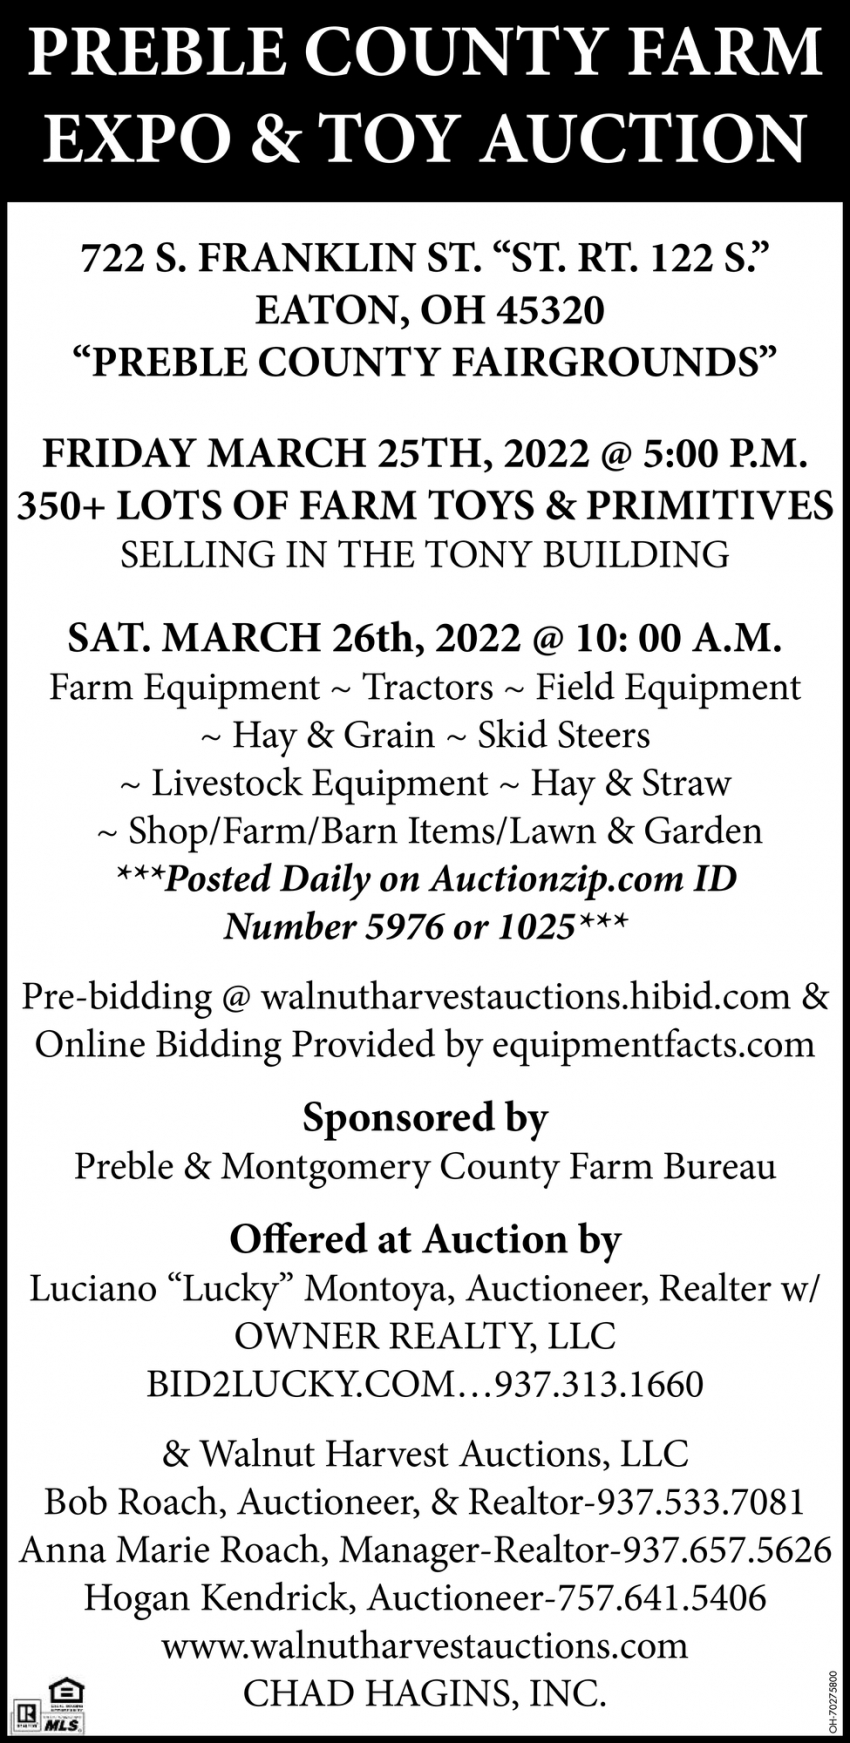 Preble County Farm Expo & Toy Auction